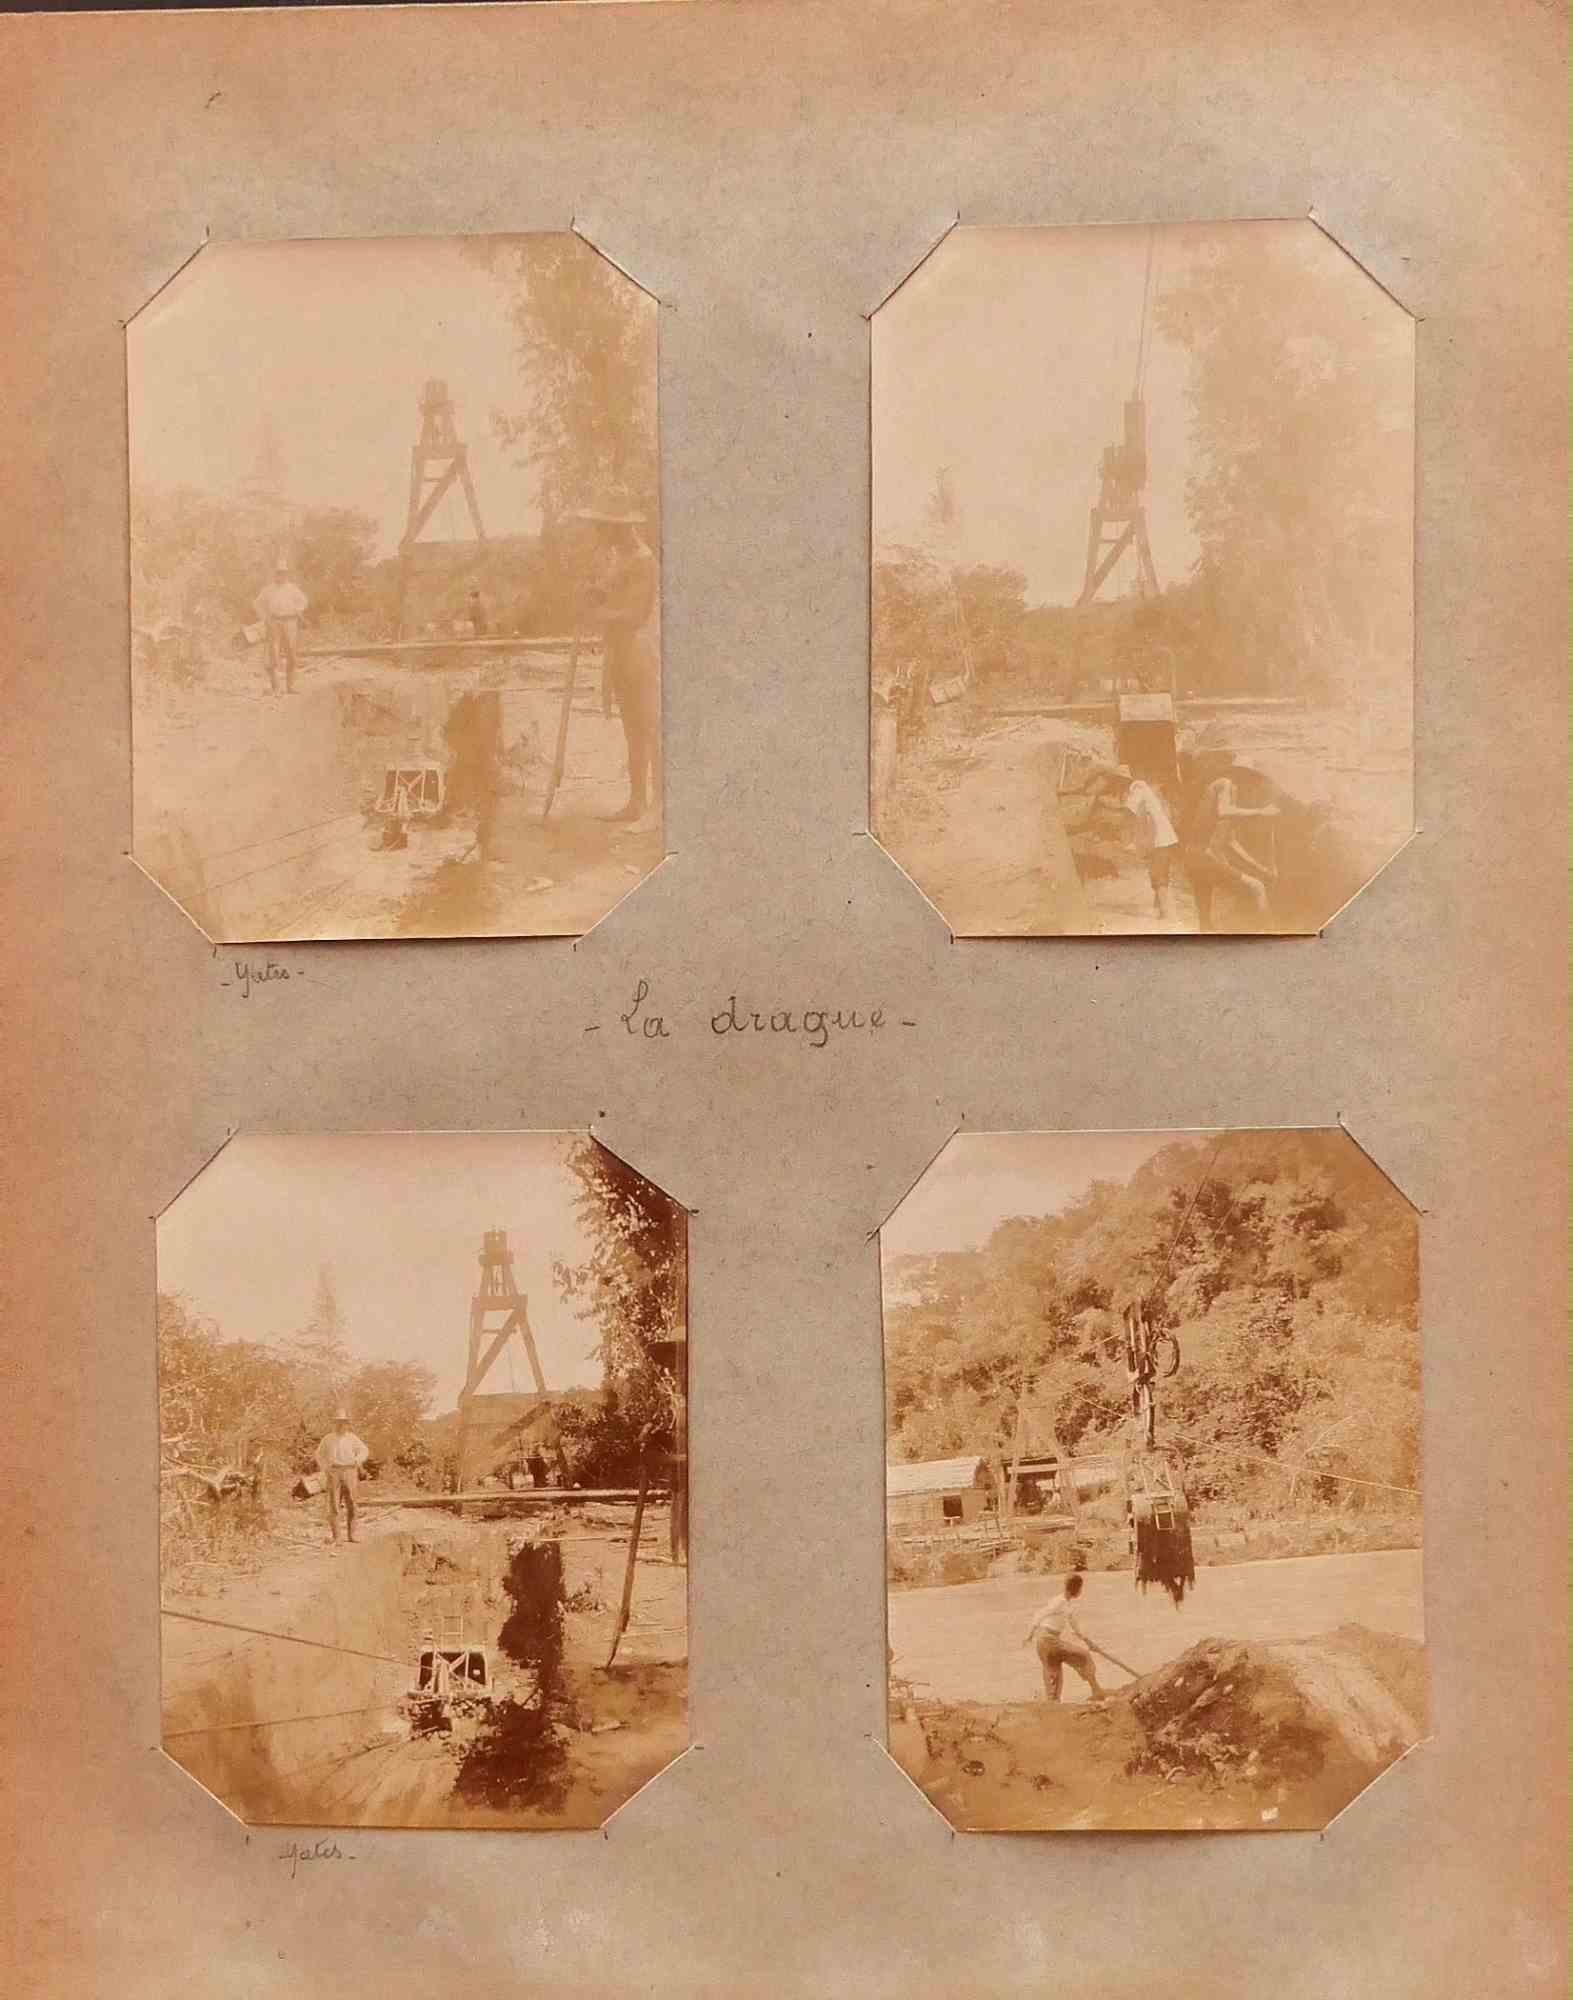 19th century landscape photography